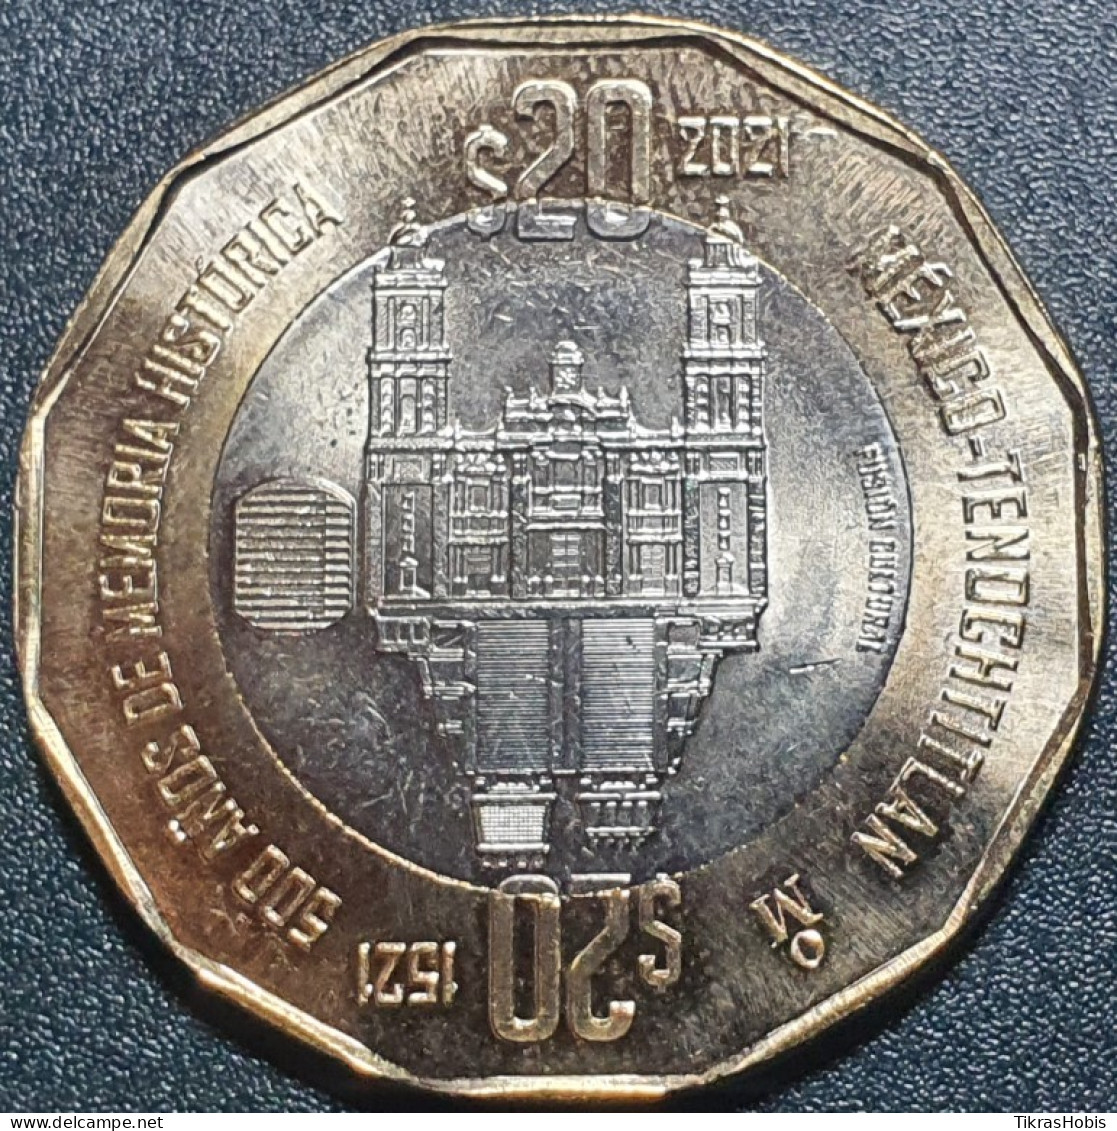 Mexico 20 Pesos, 2021 Tenochtitlan Collapse 500 UC105 - Mexico